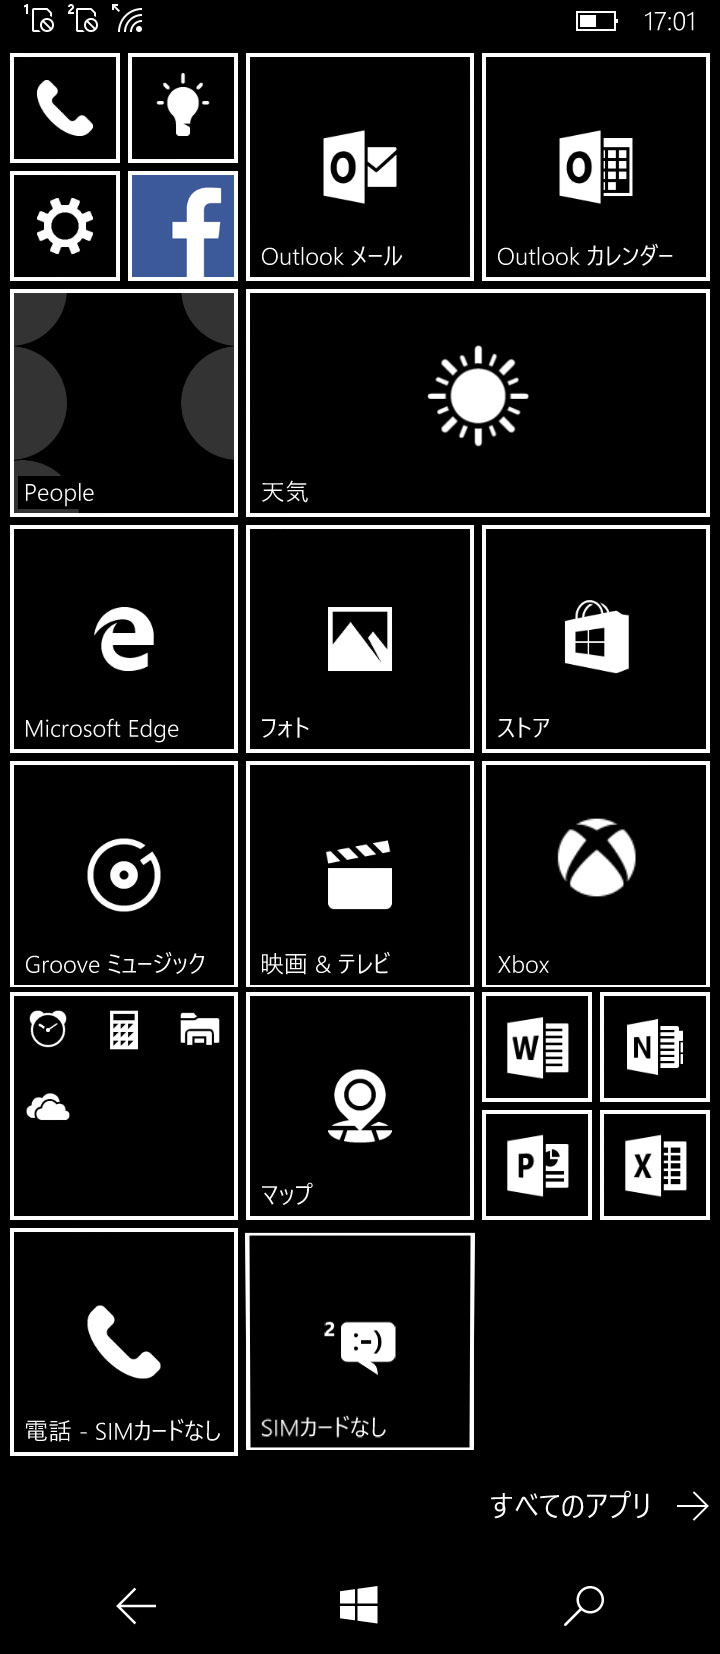 Windows 10 Mobileスマホkatana02の黒背景画面を変更するために画面設定を変更してみた ちえの気ままログ